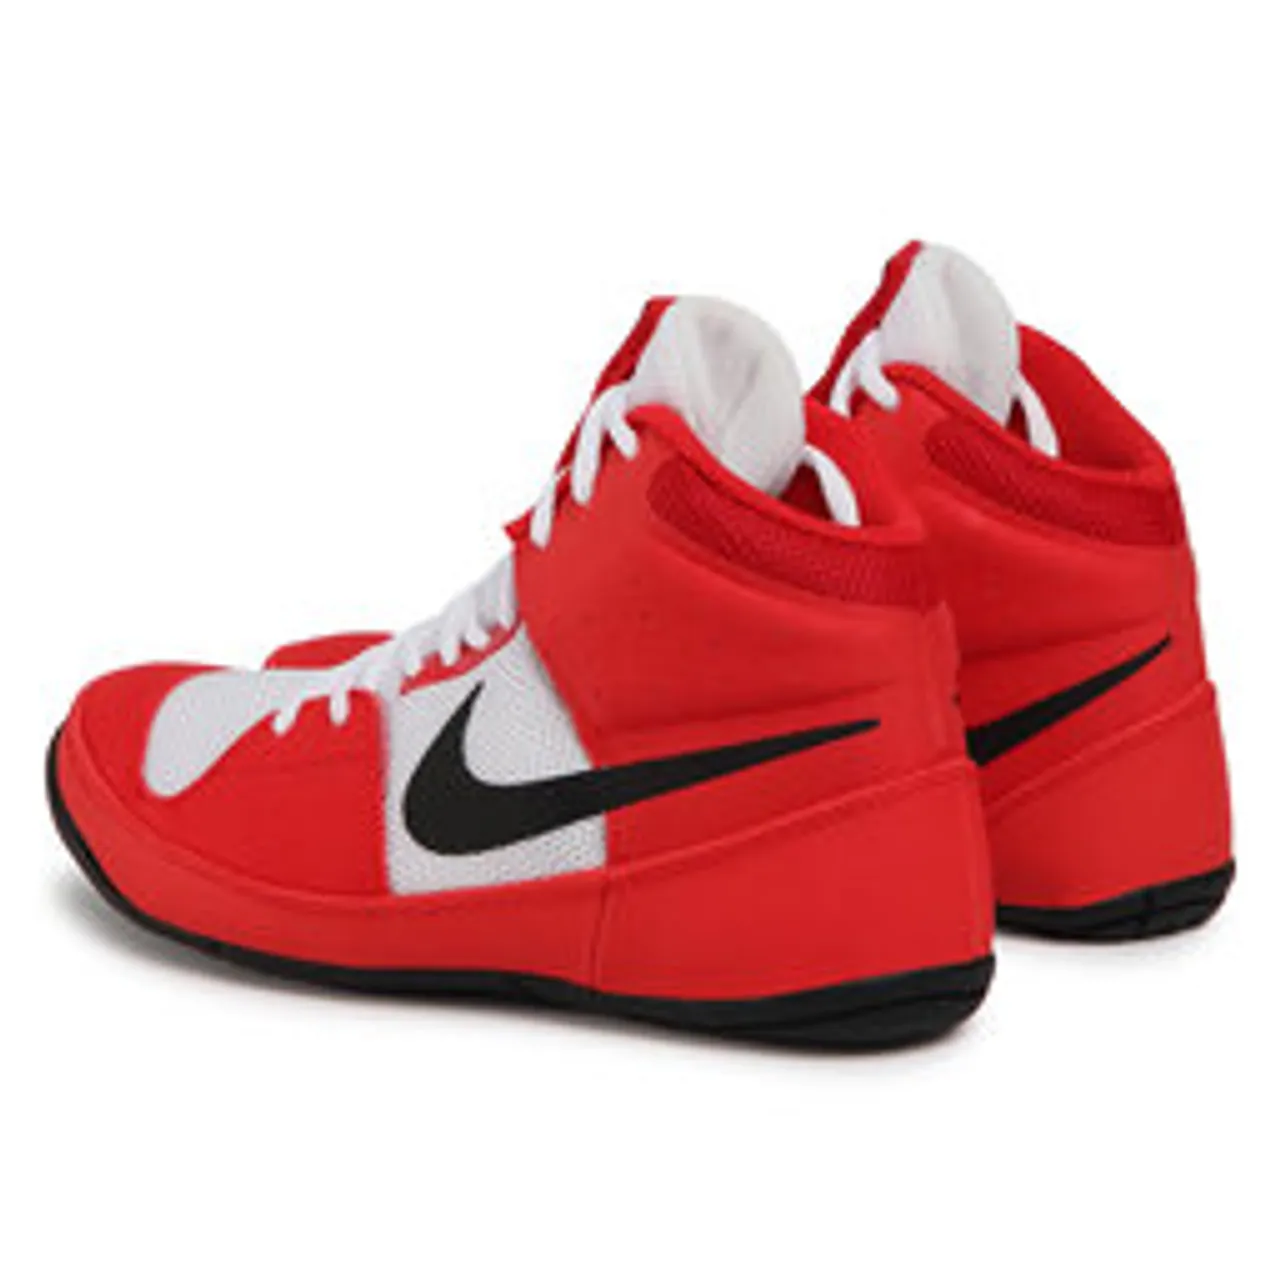 Schuhe Nike Fury A02416 601 University Red/Black/White